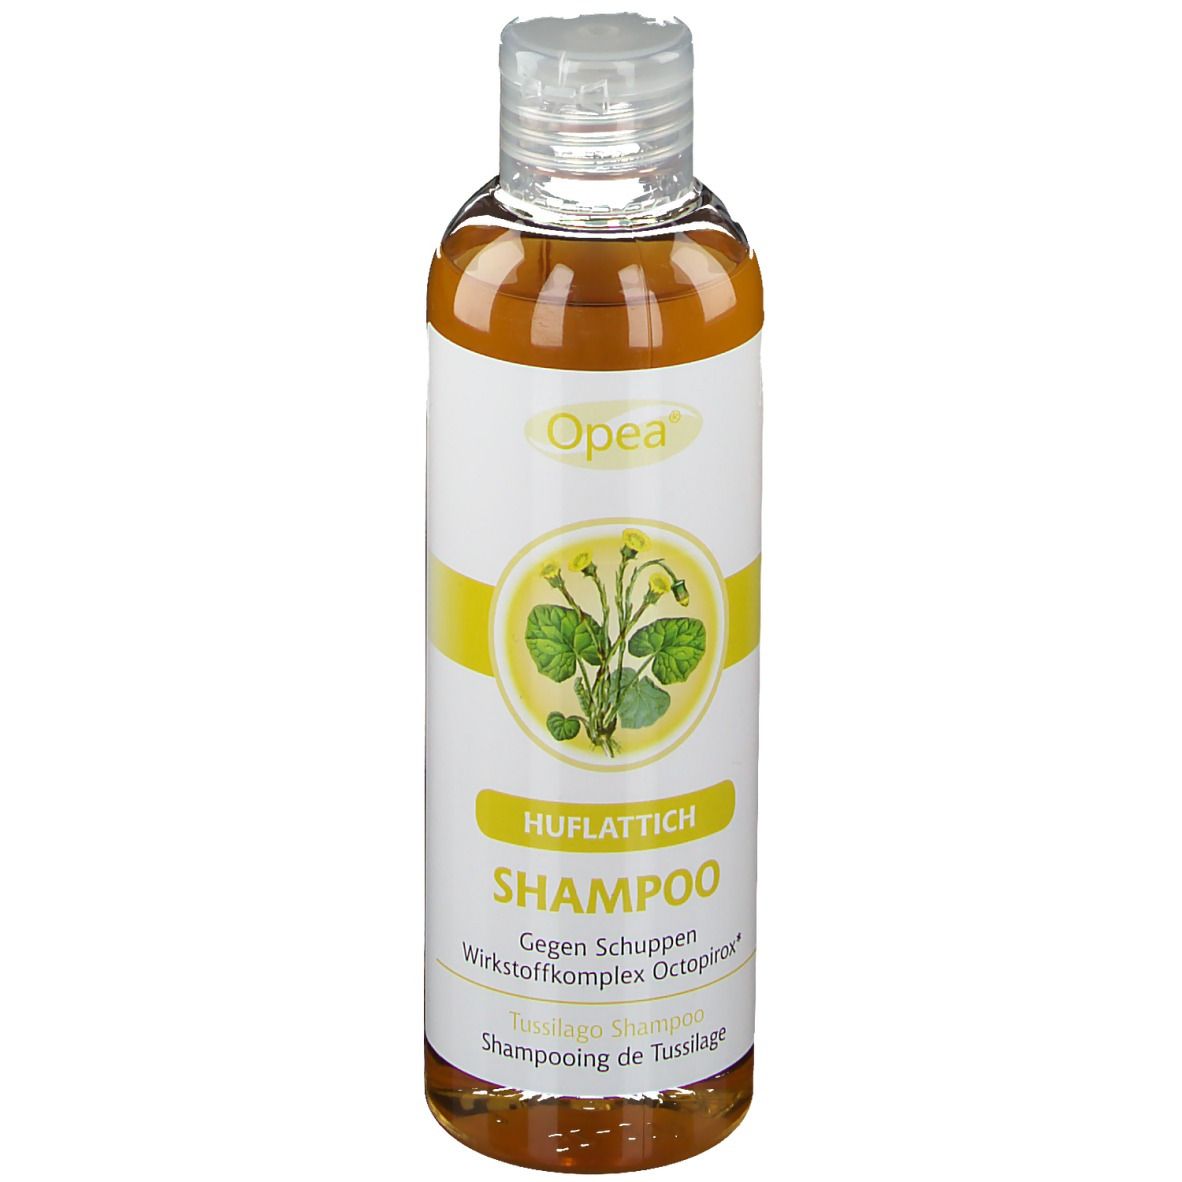 Opea® Shampoo Huflattich